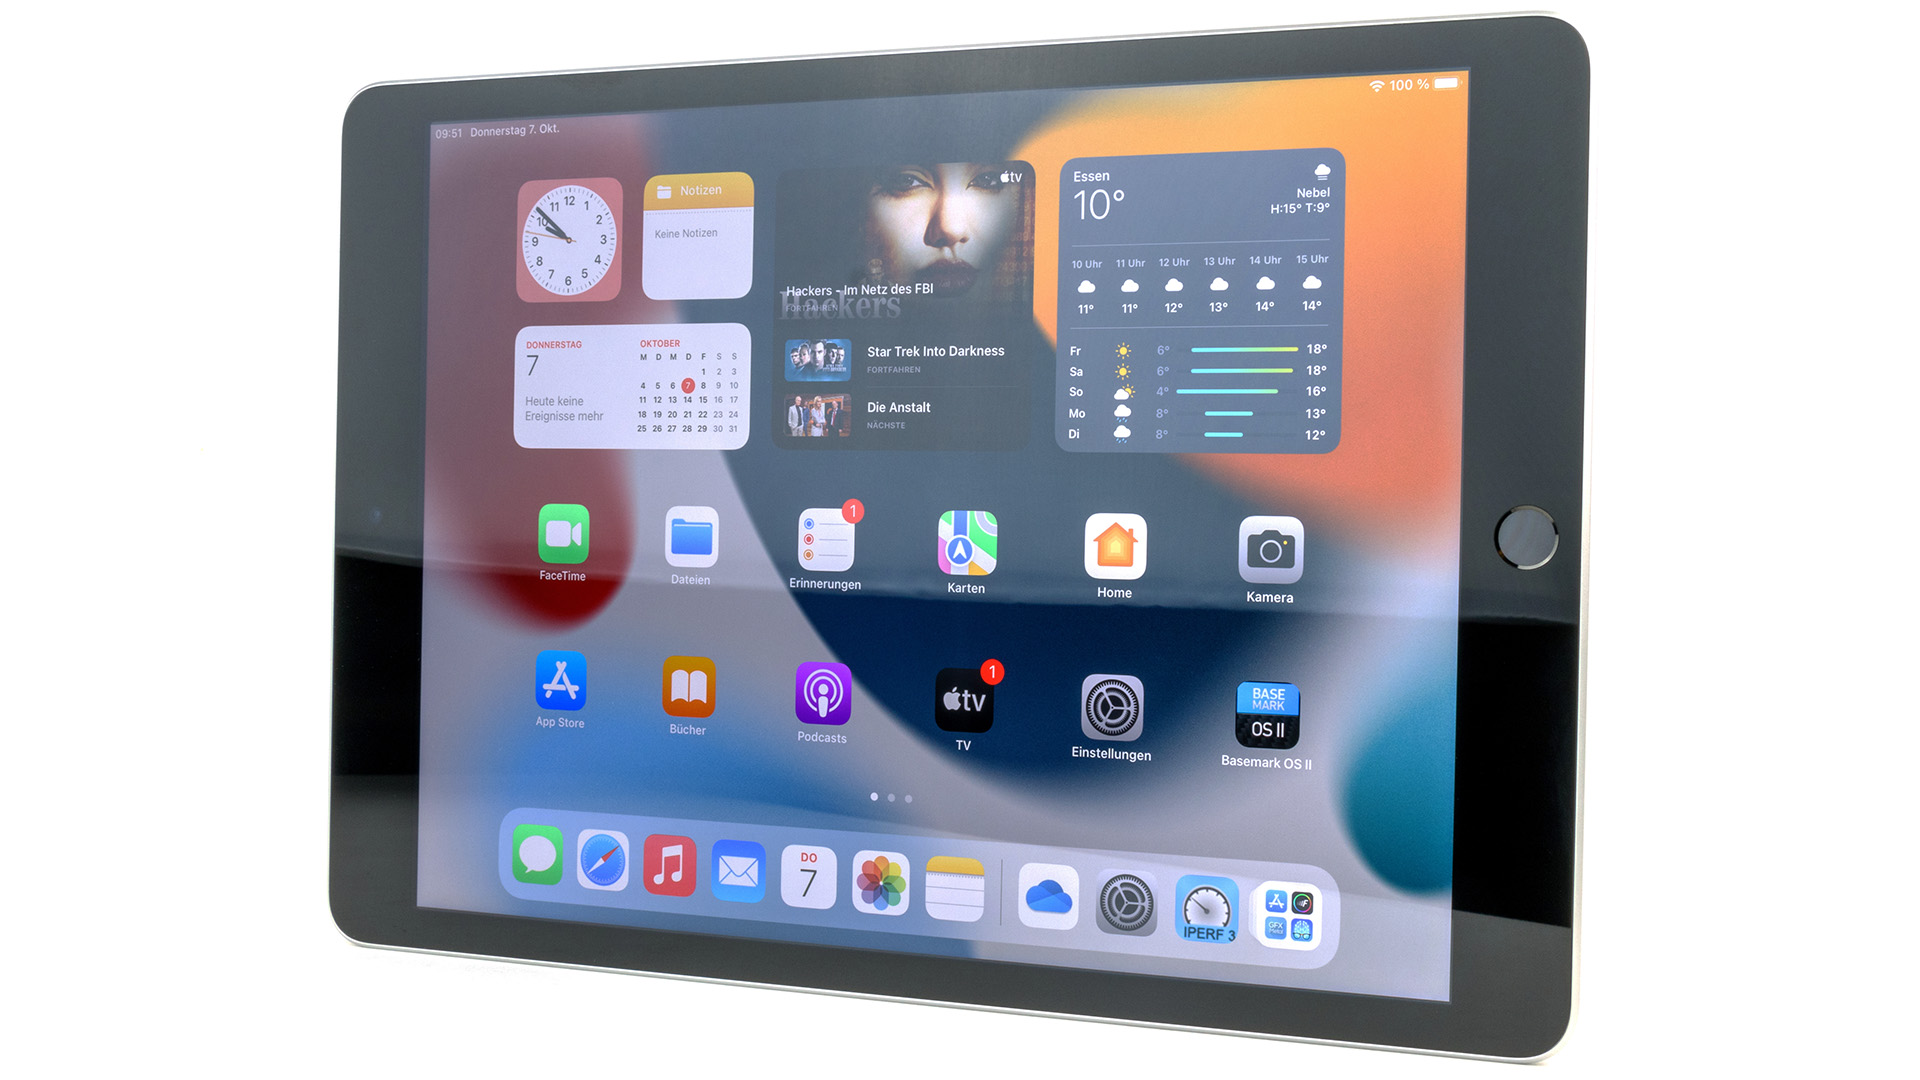 tung Akvarium vi 2021 Apple iPad 10.2 (9th Gen) review: Subtle improvements for the most  affordable Apple tablet - NotebookCheck.net Reviews